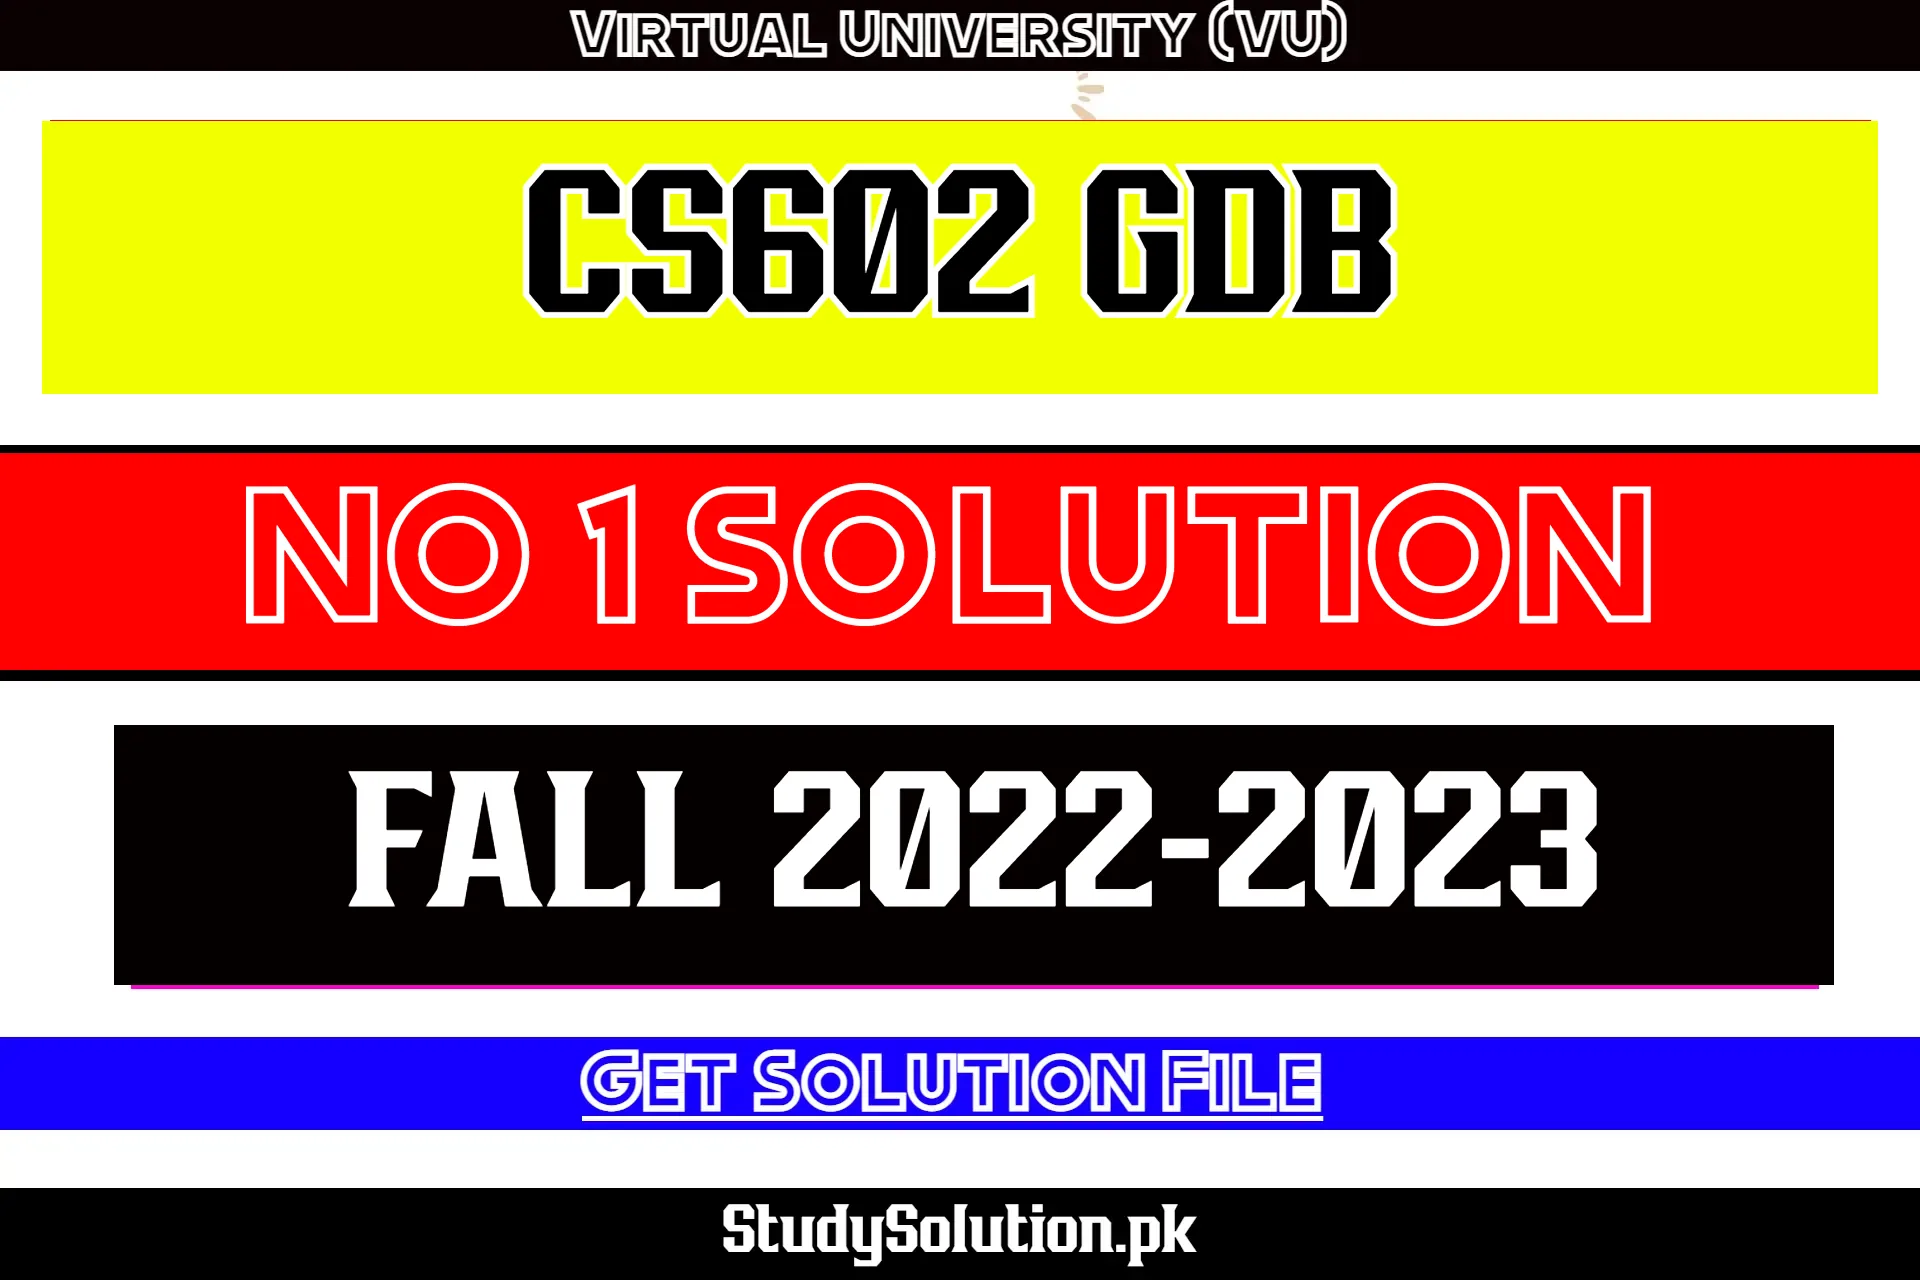 CS602 GDB No 1 Solution Fall 2022